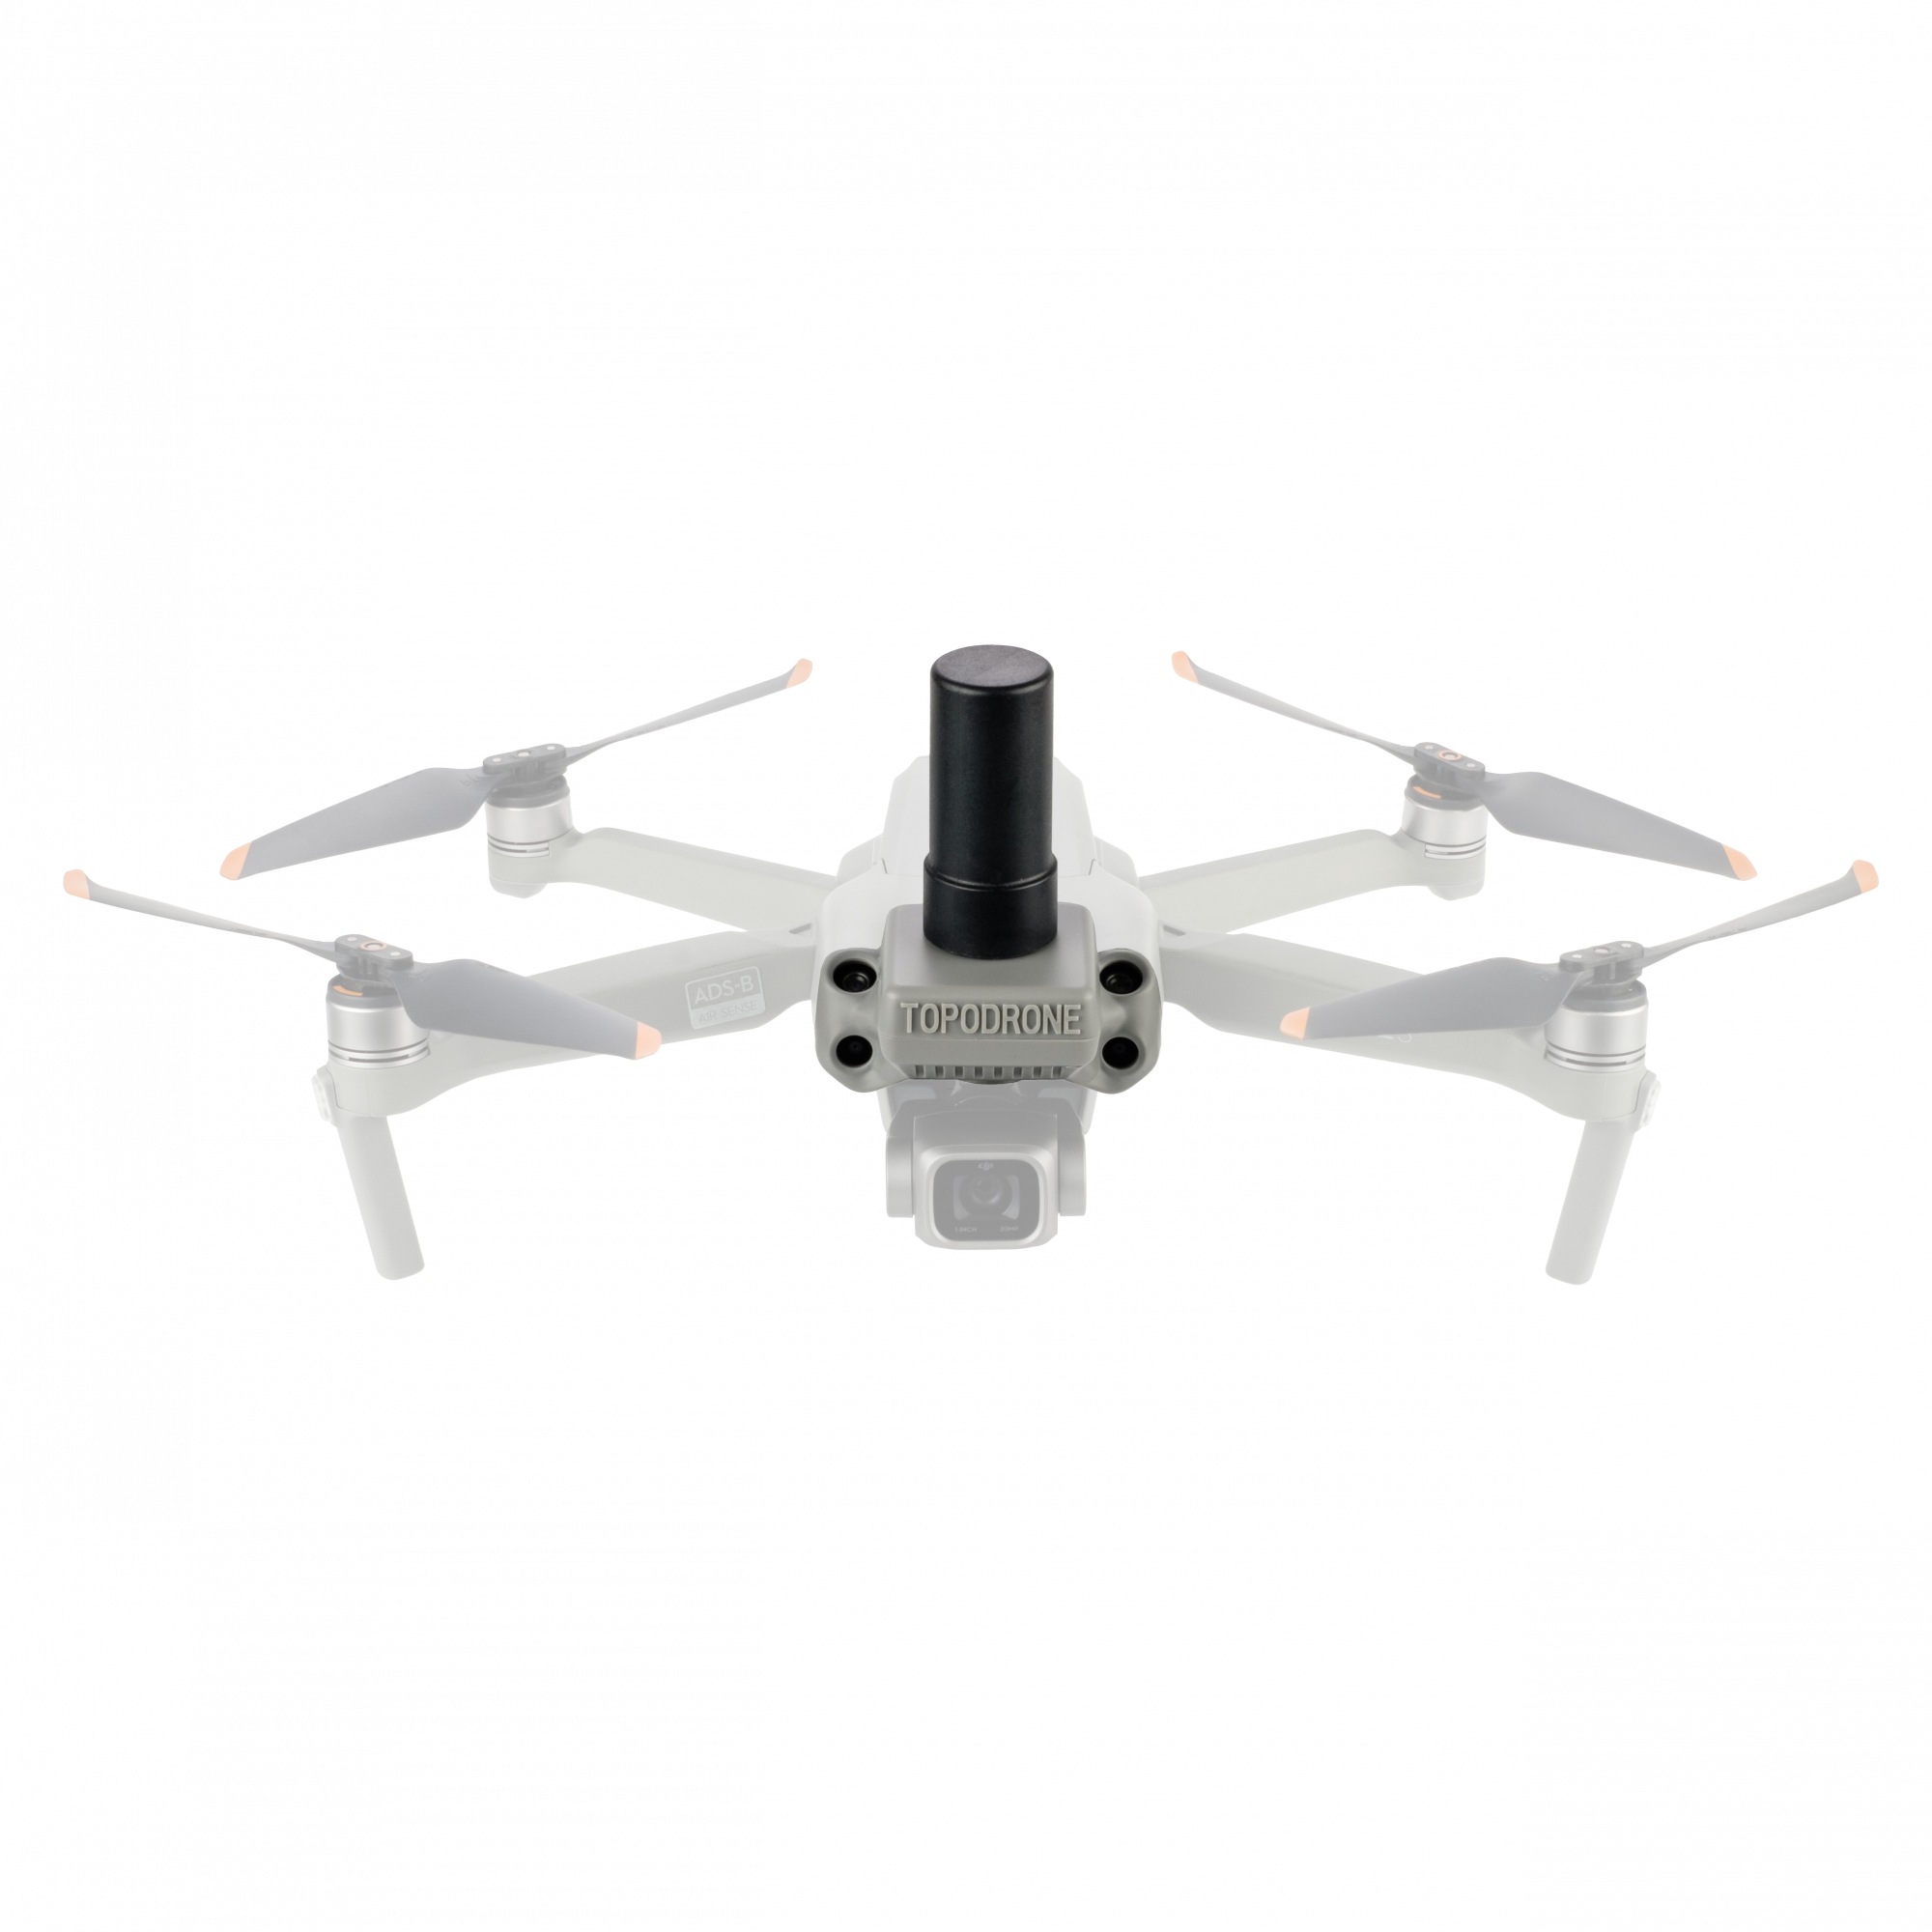 DJI Air 2s - Camera - Drone Parts Center